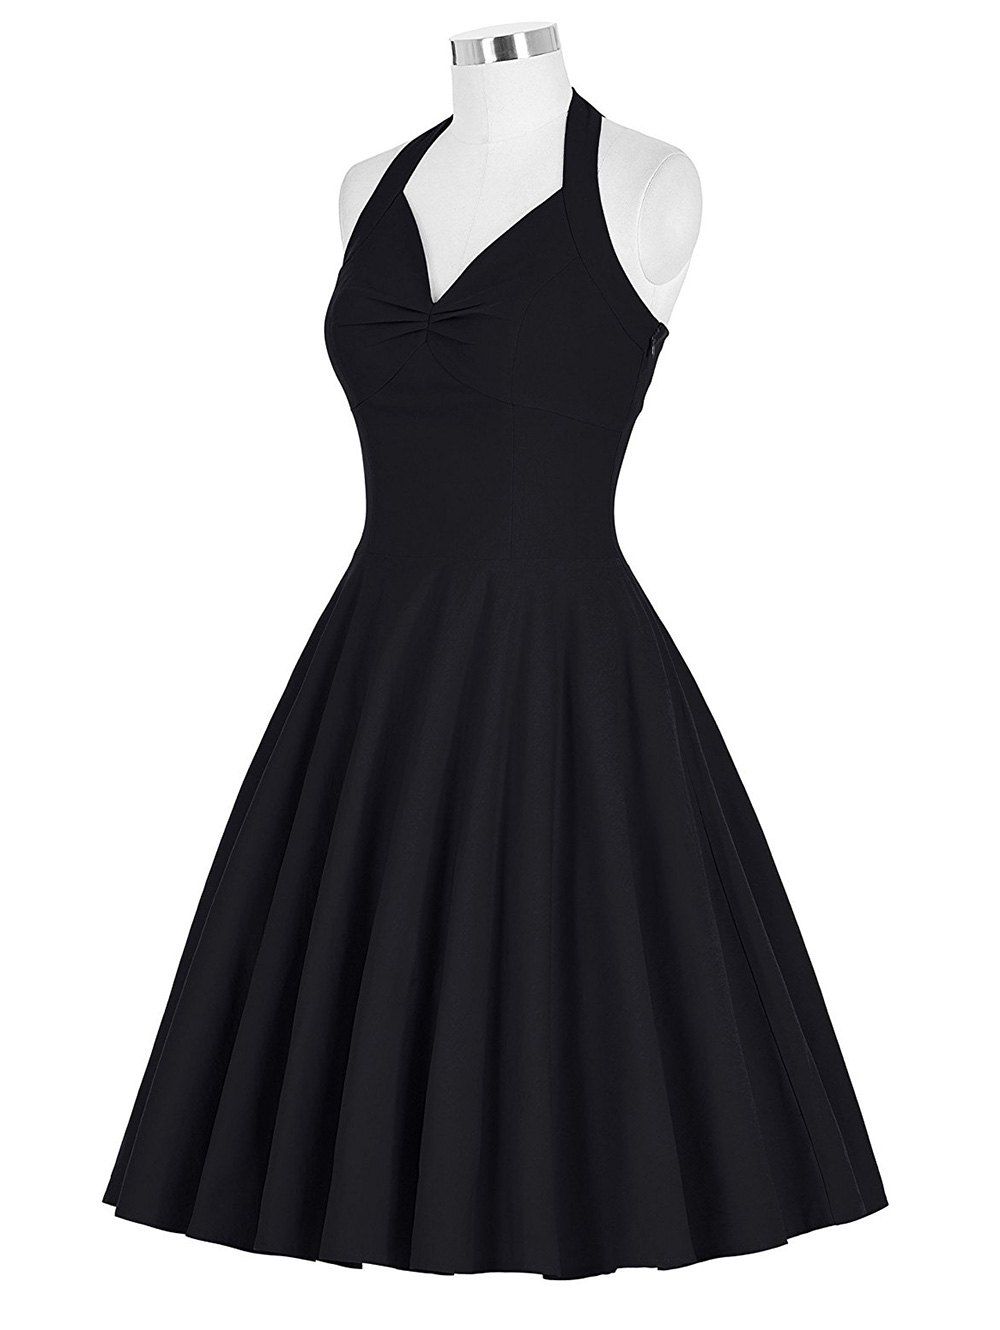 Black L Lace-up Halter Vintage Swing Corset Club Dress | RoseGal.com